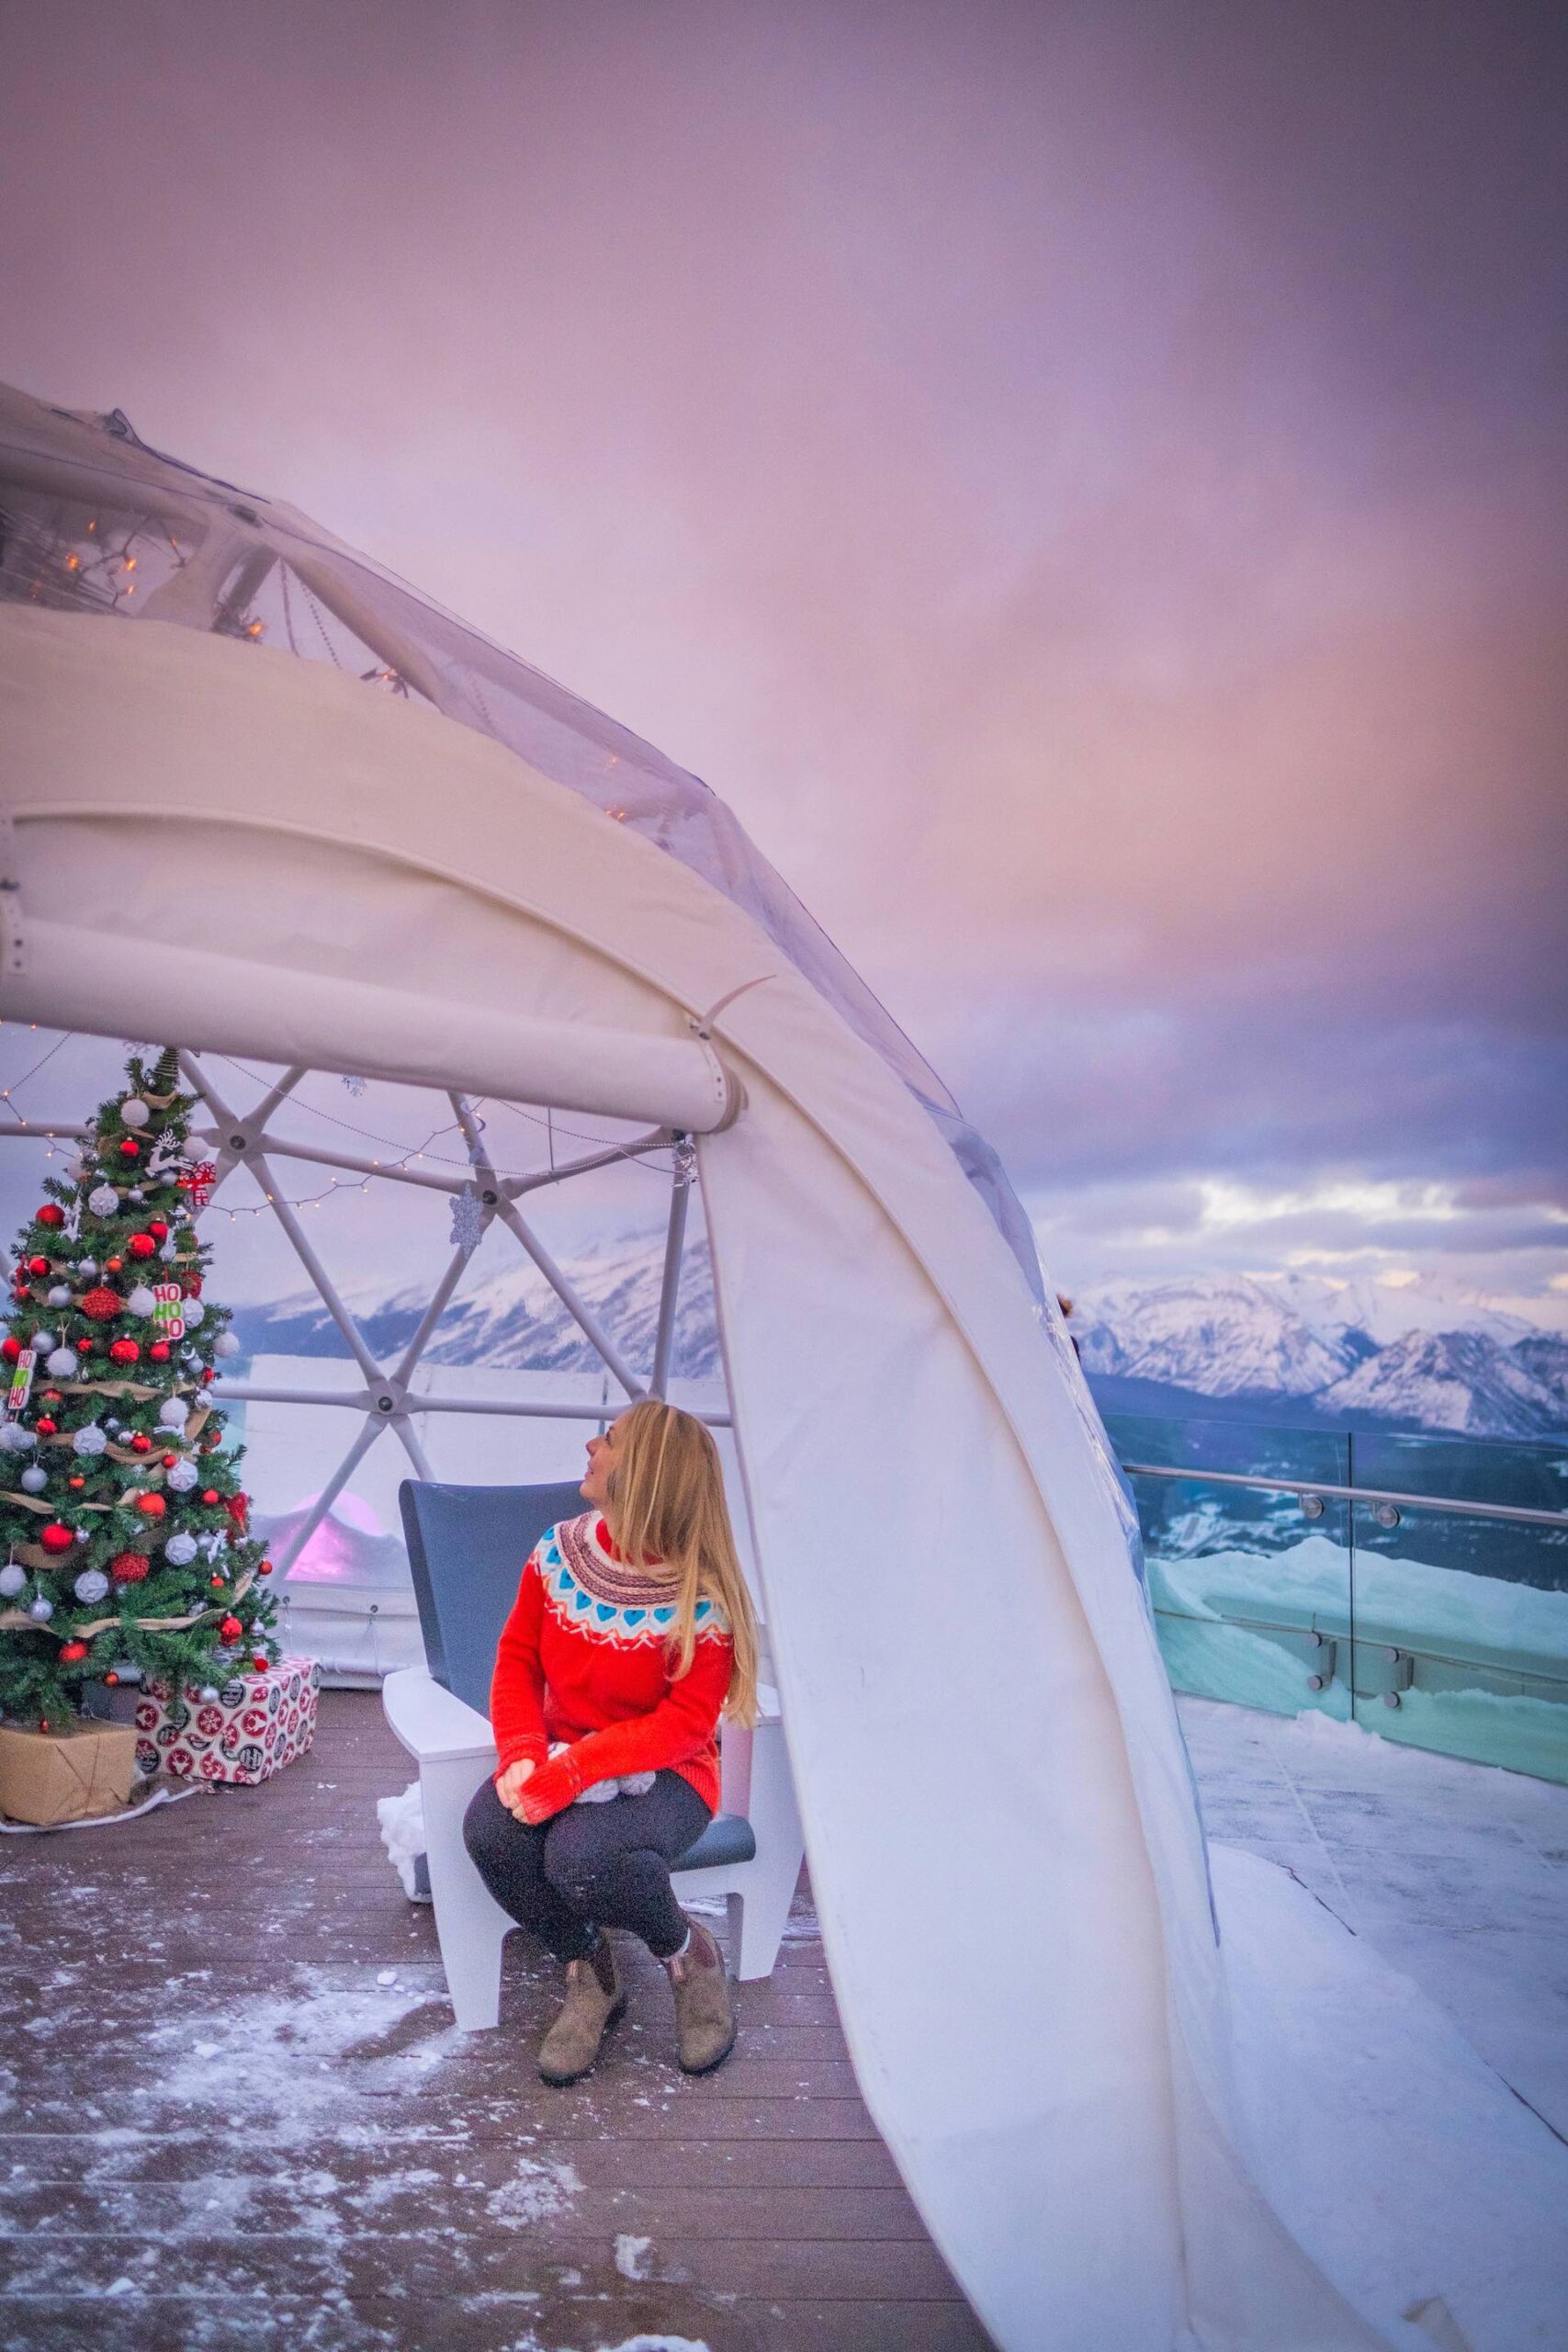 Took the Banff Gondola up during the Christmas Season